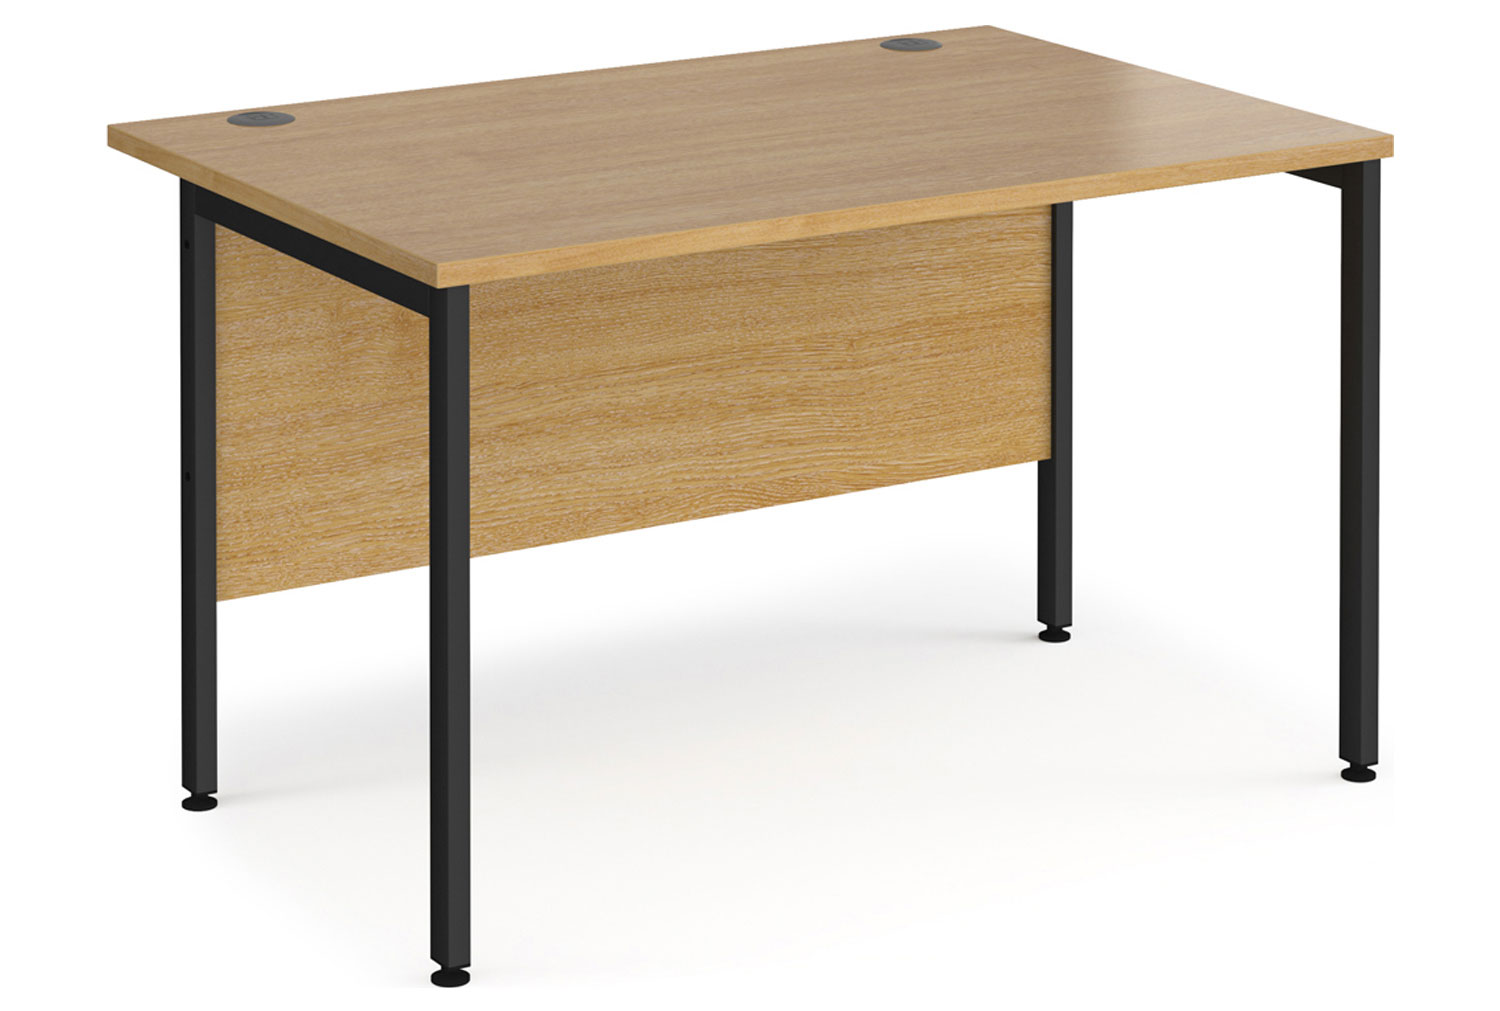 Value Line Deluxe H-Leg Rectangular Office Desk (Black Legs), 120wx80dx73h (cm), Oak, Express Delivery